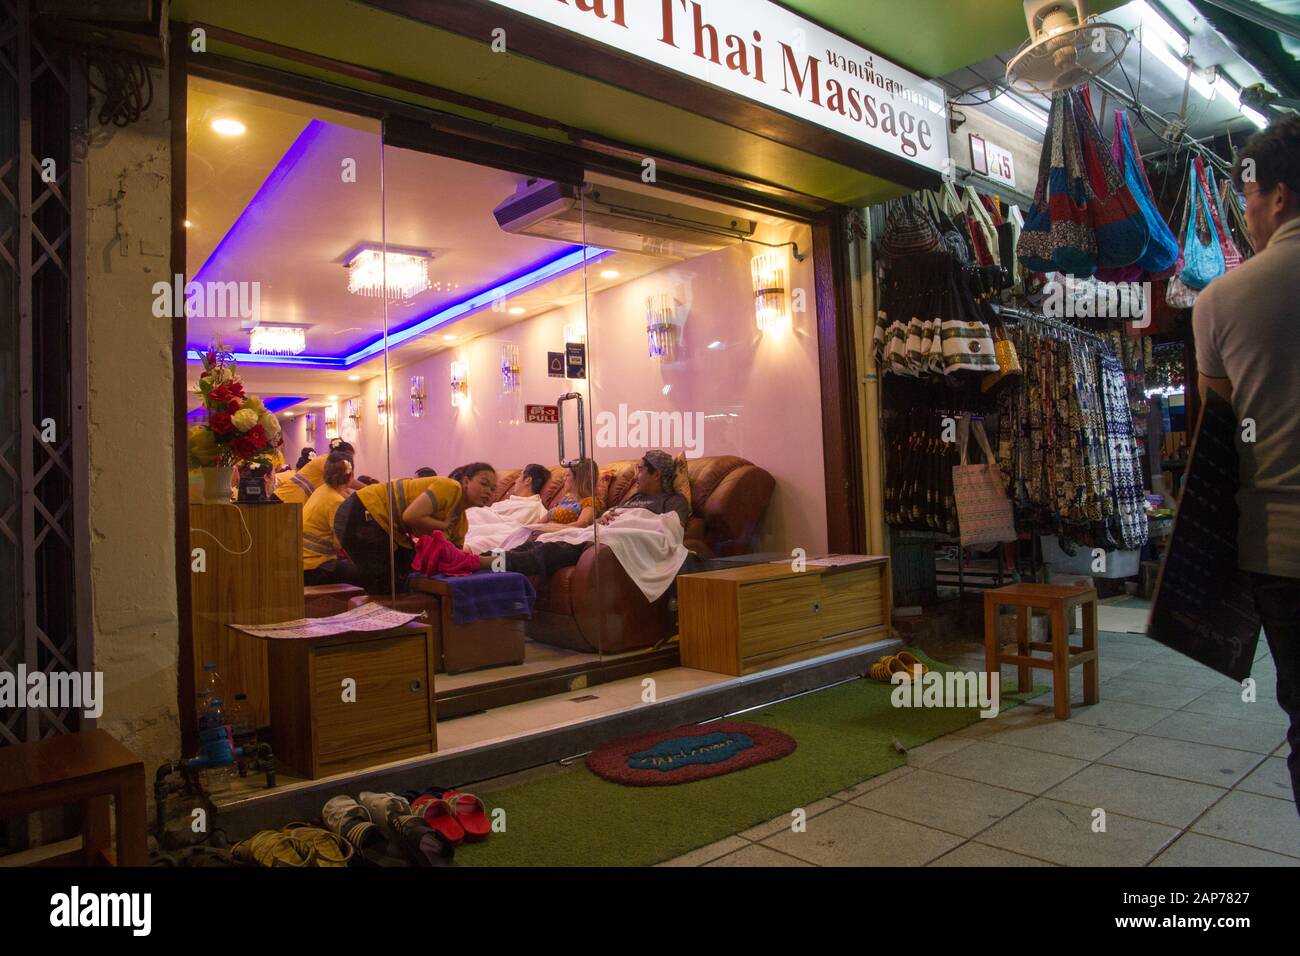 Thai massage shop in street Bangkok, Thailand Stock Photo - Alamy